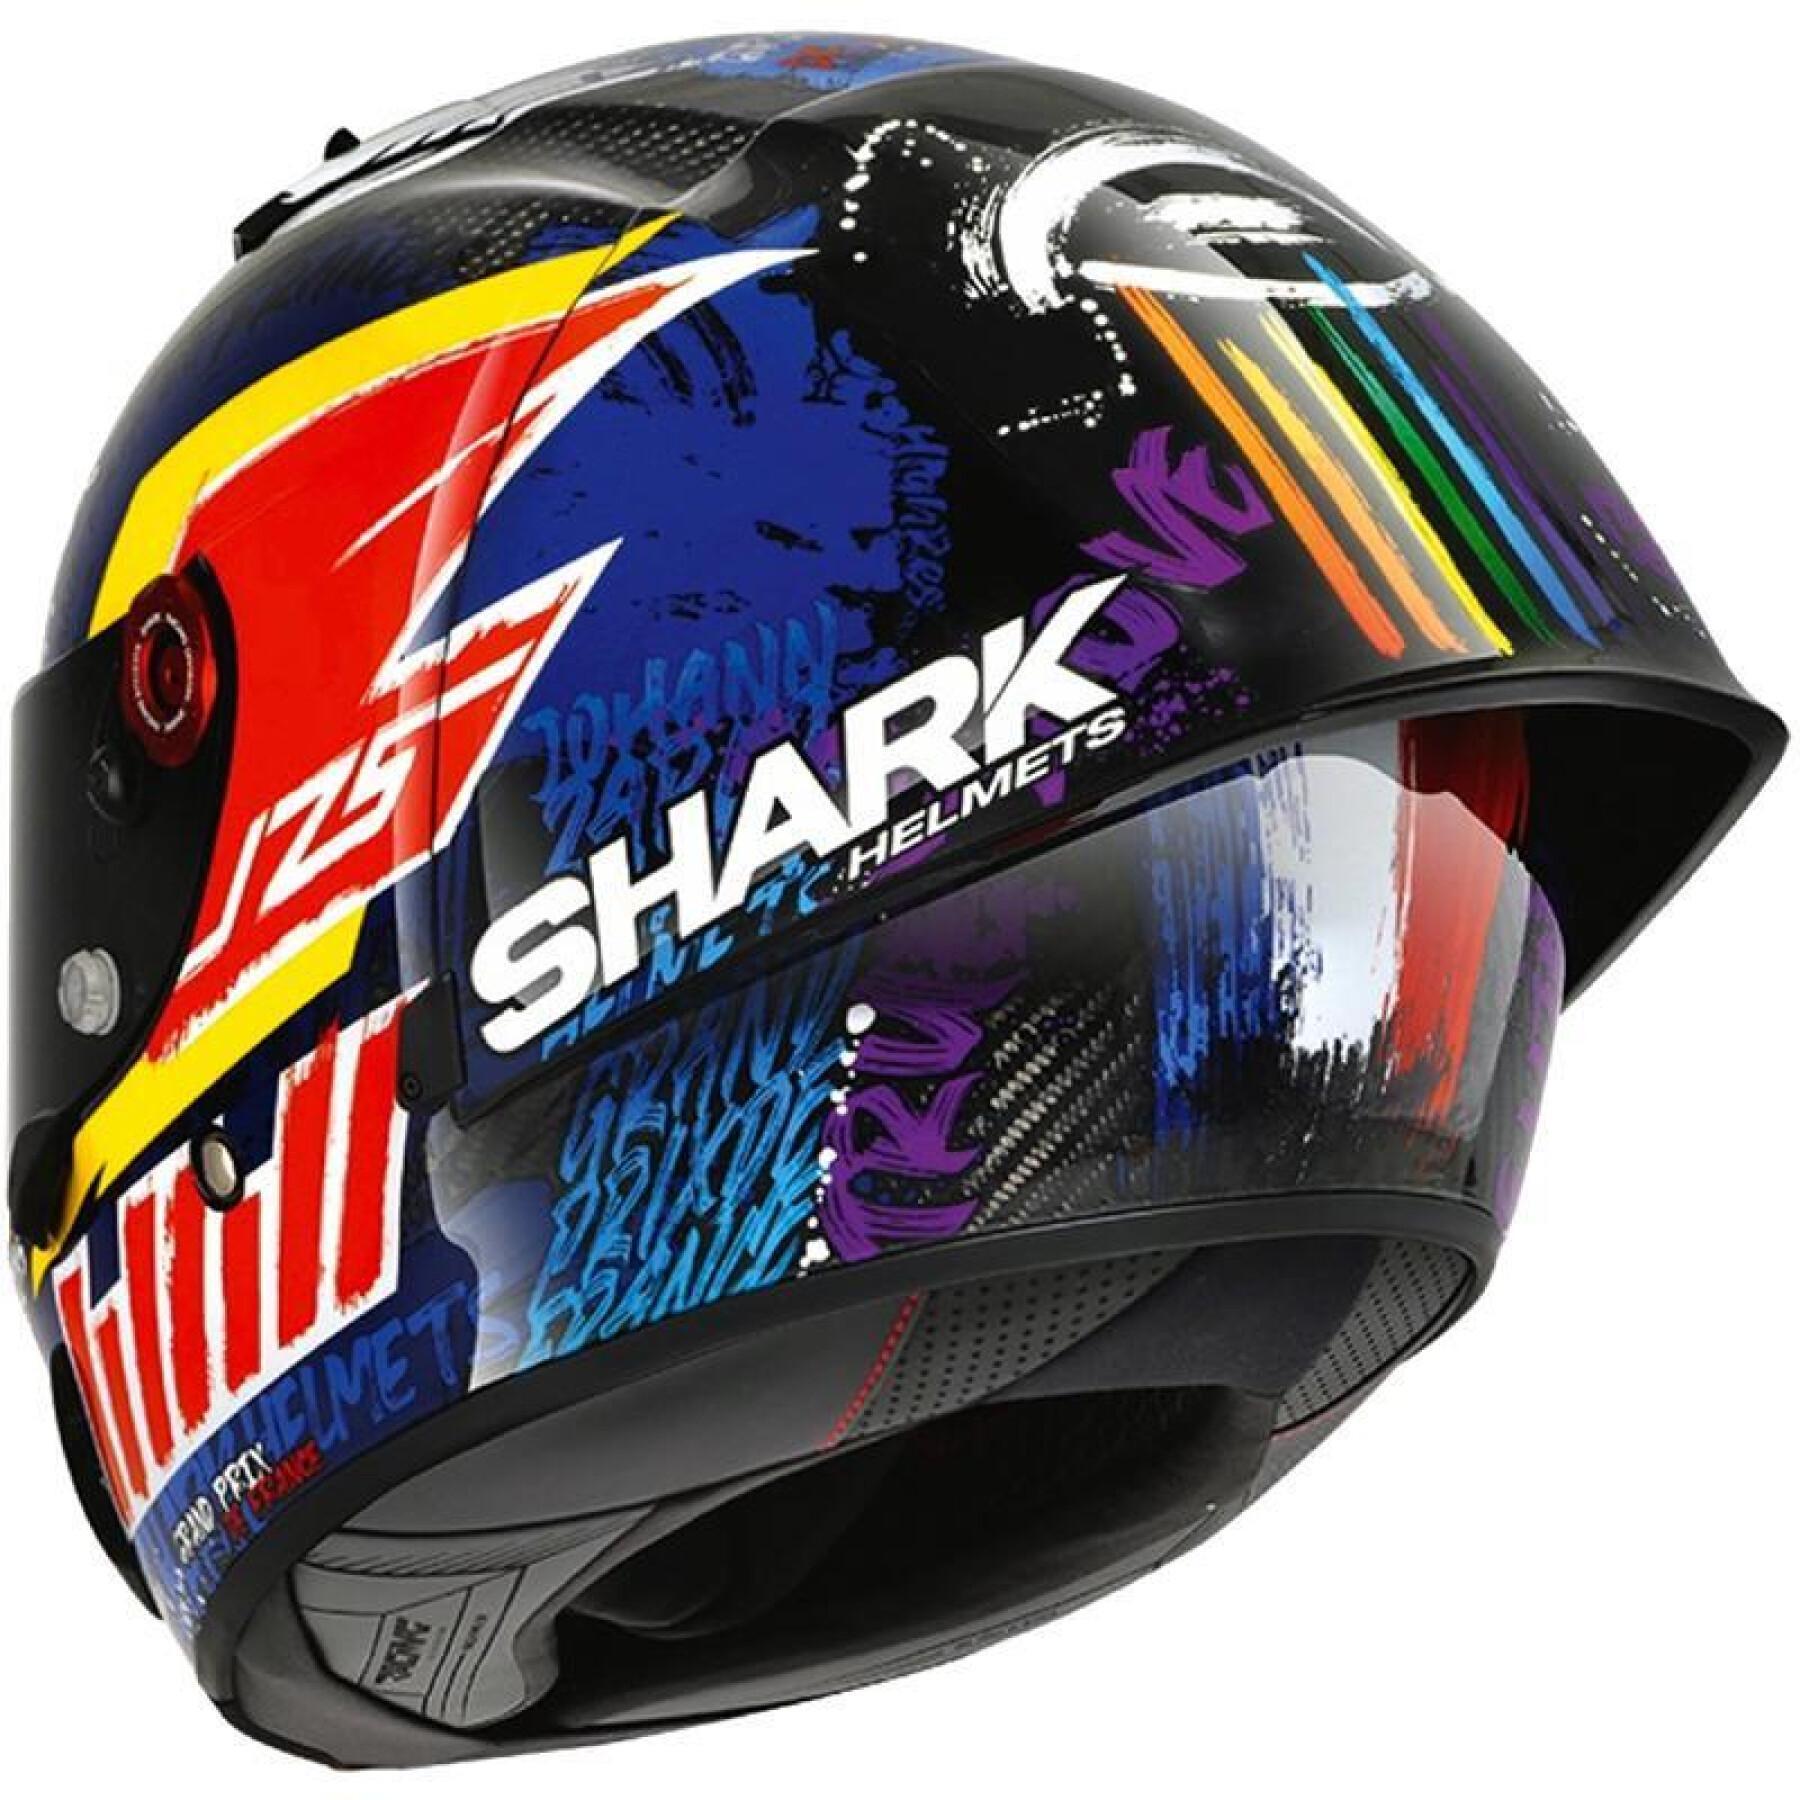 Casque intégral Shark Race-R Pro GP 06  Replica Zarco Chakra